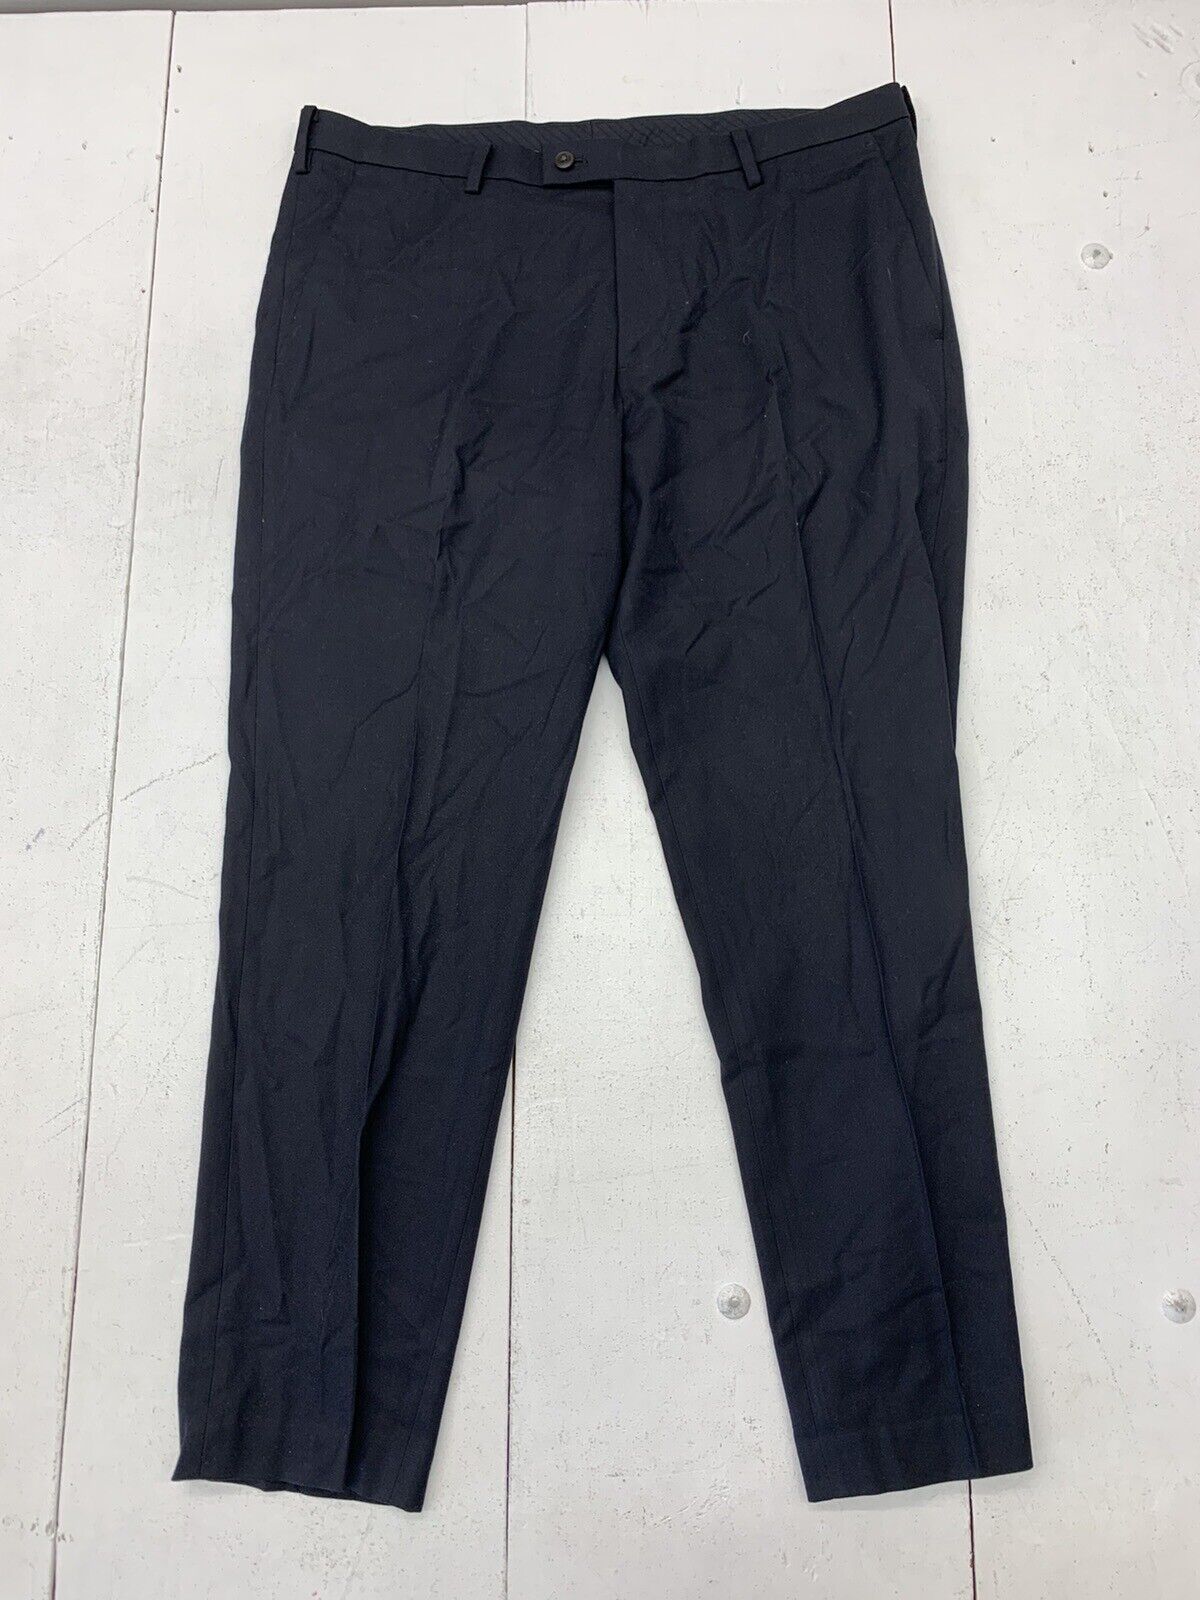 WW2 US Military Combat Trousers Pants Size 36 | eBay